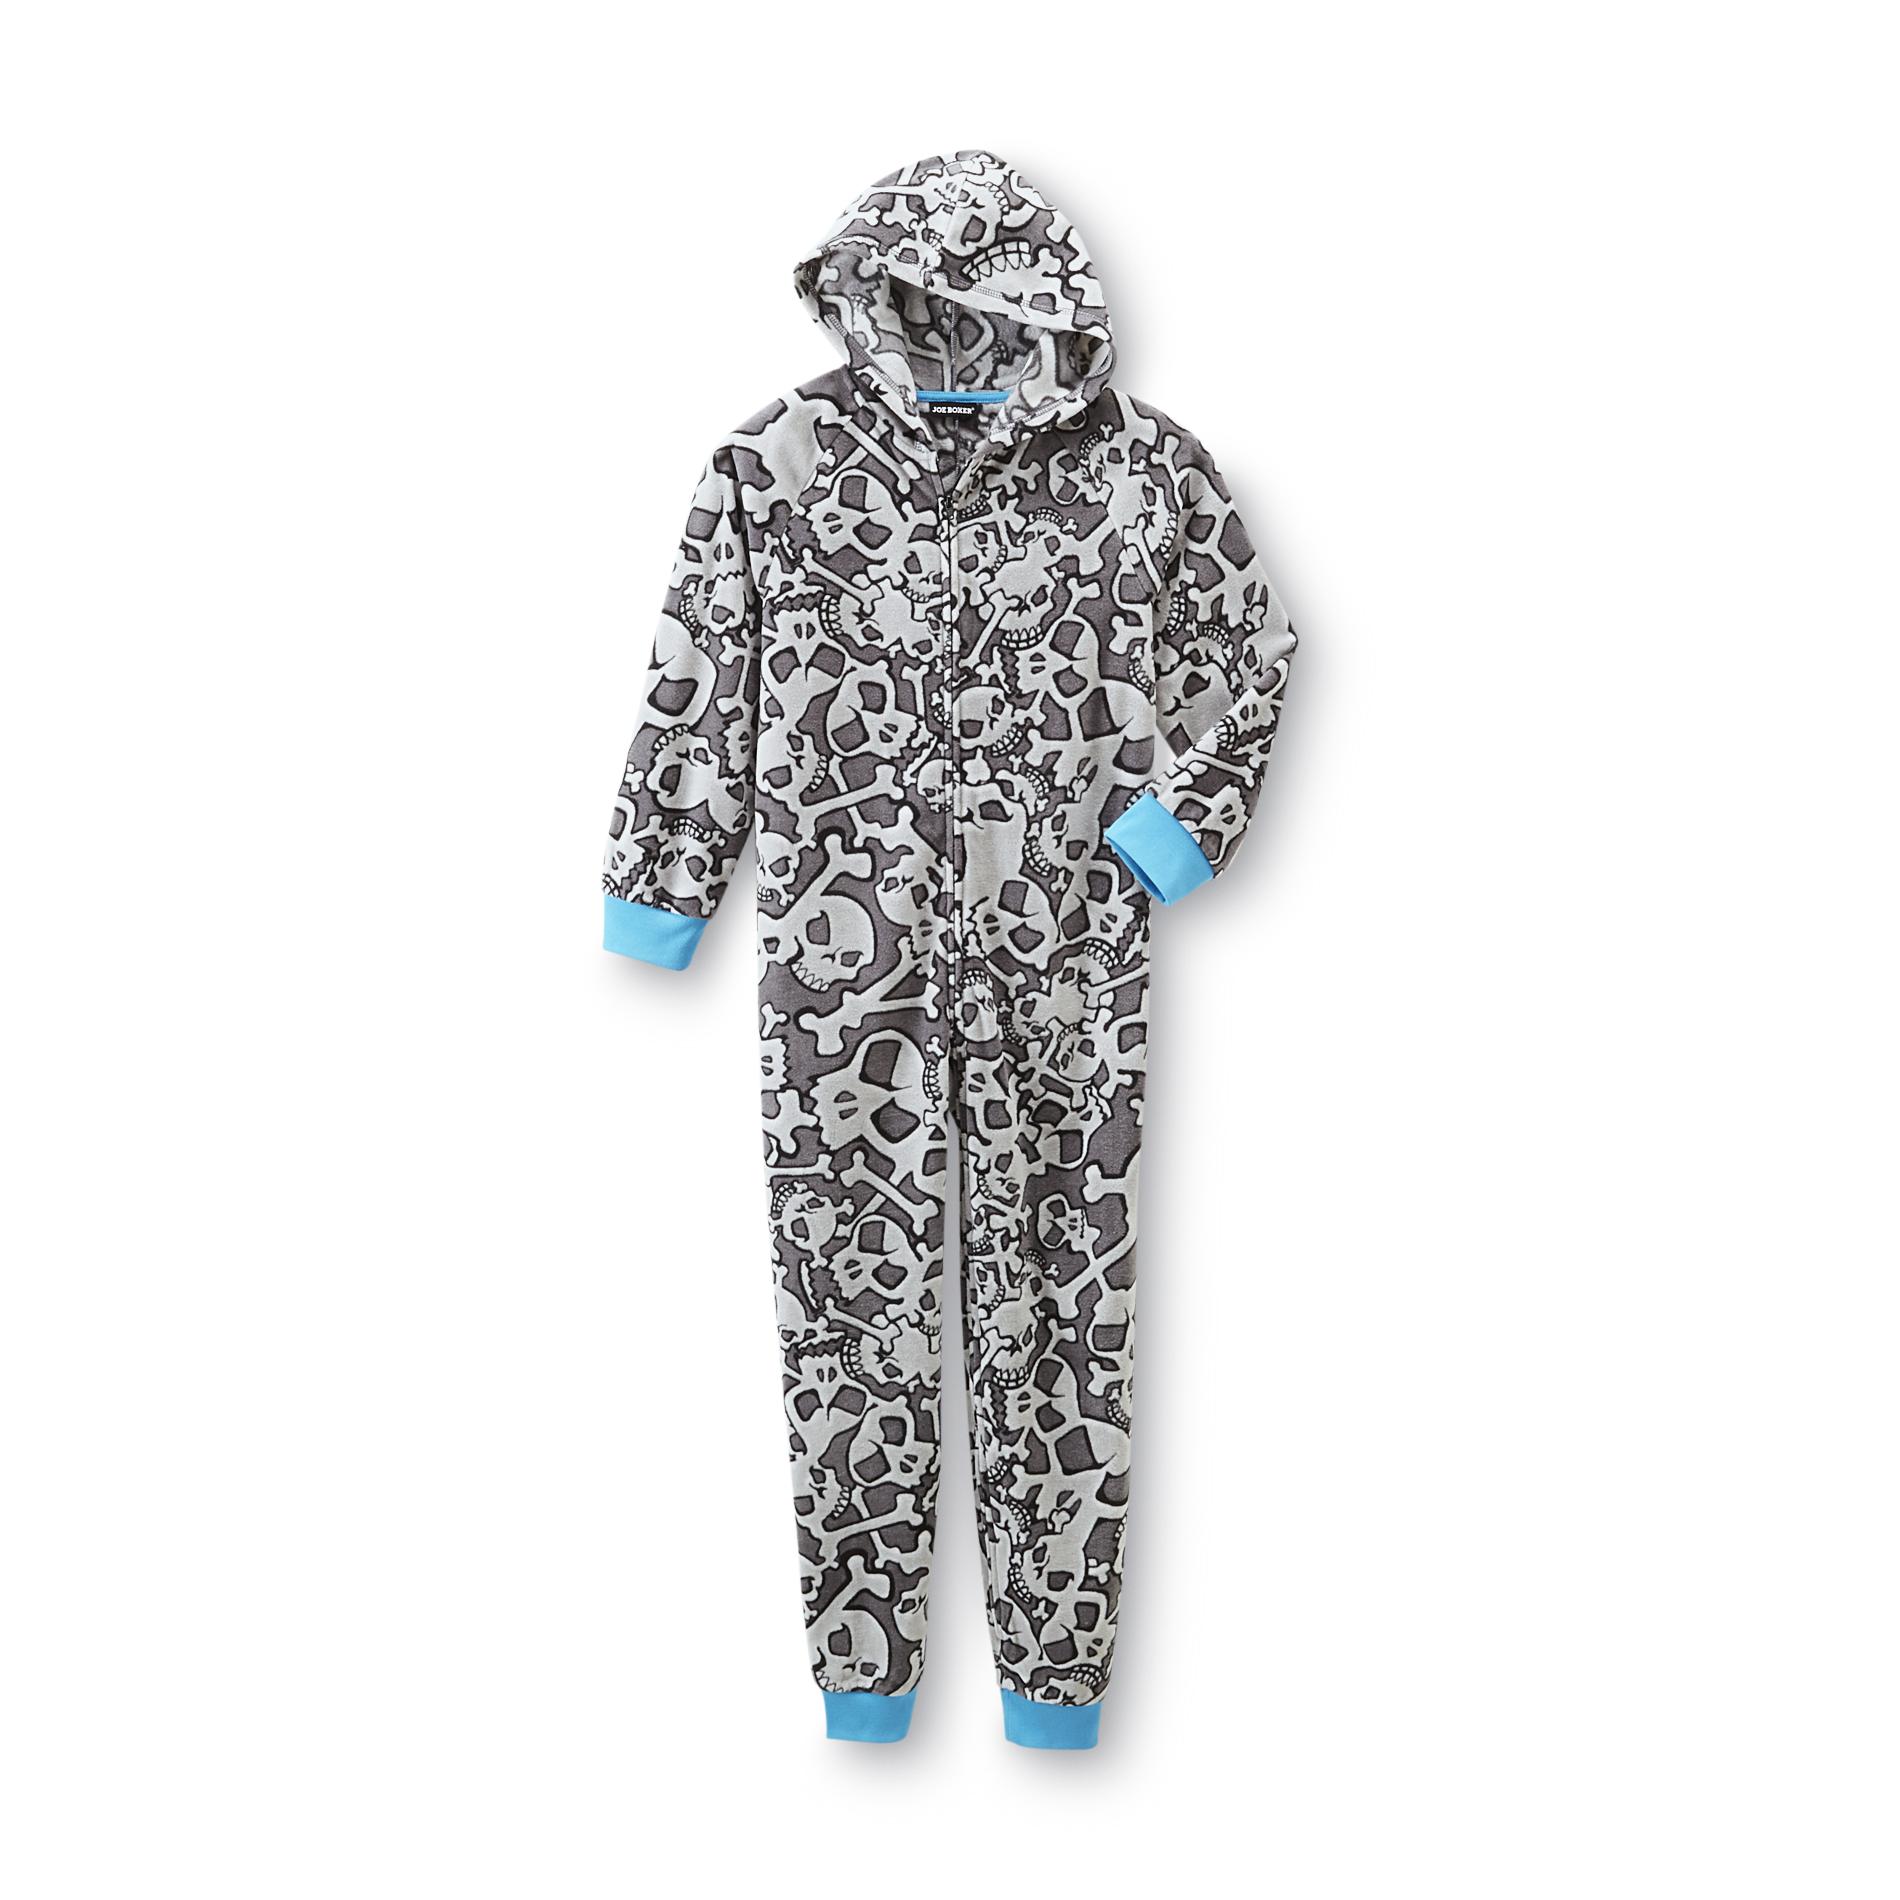 Joe Boxer Boy's Hooded Fleece Pajamas - Skulls